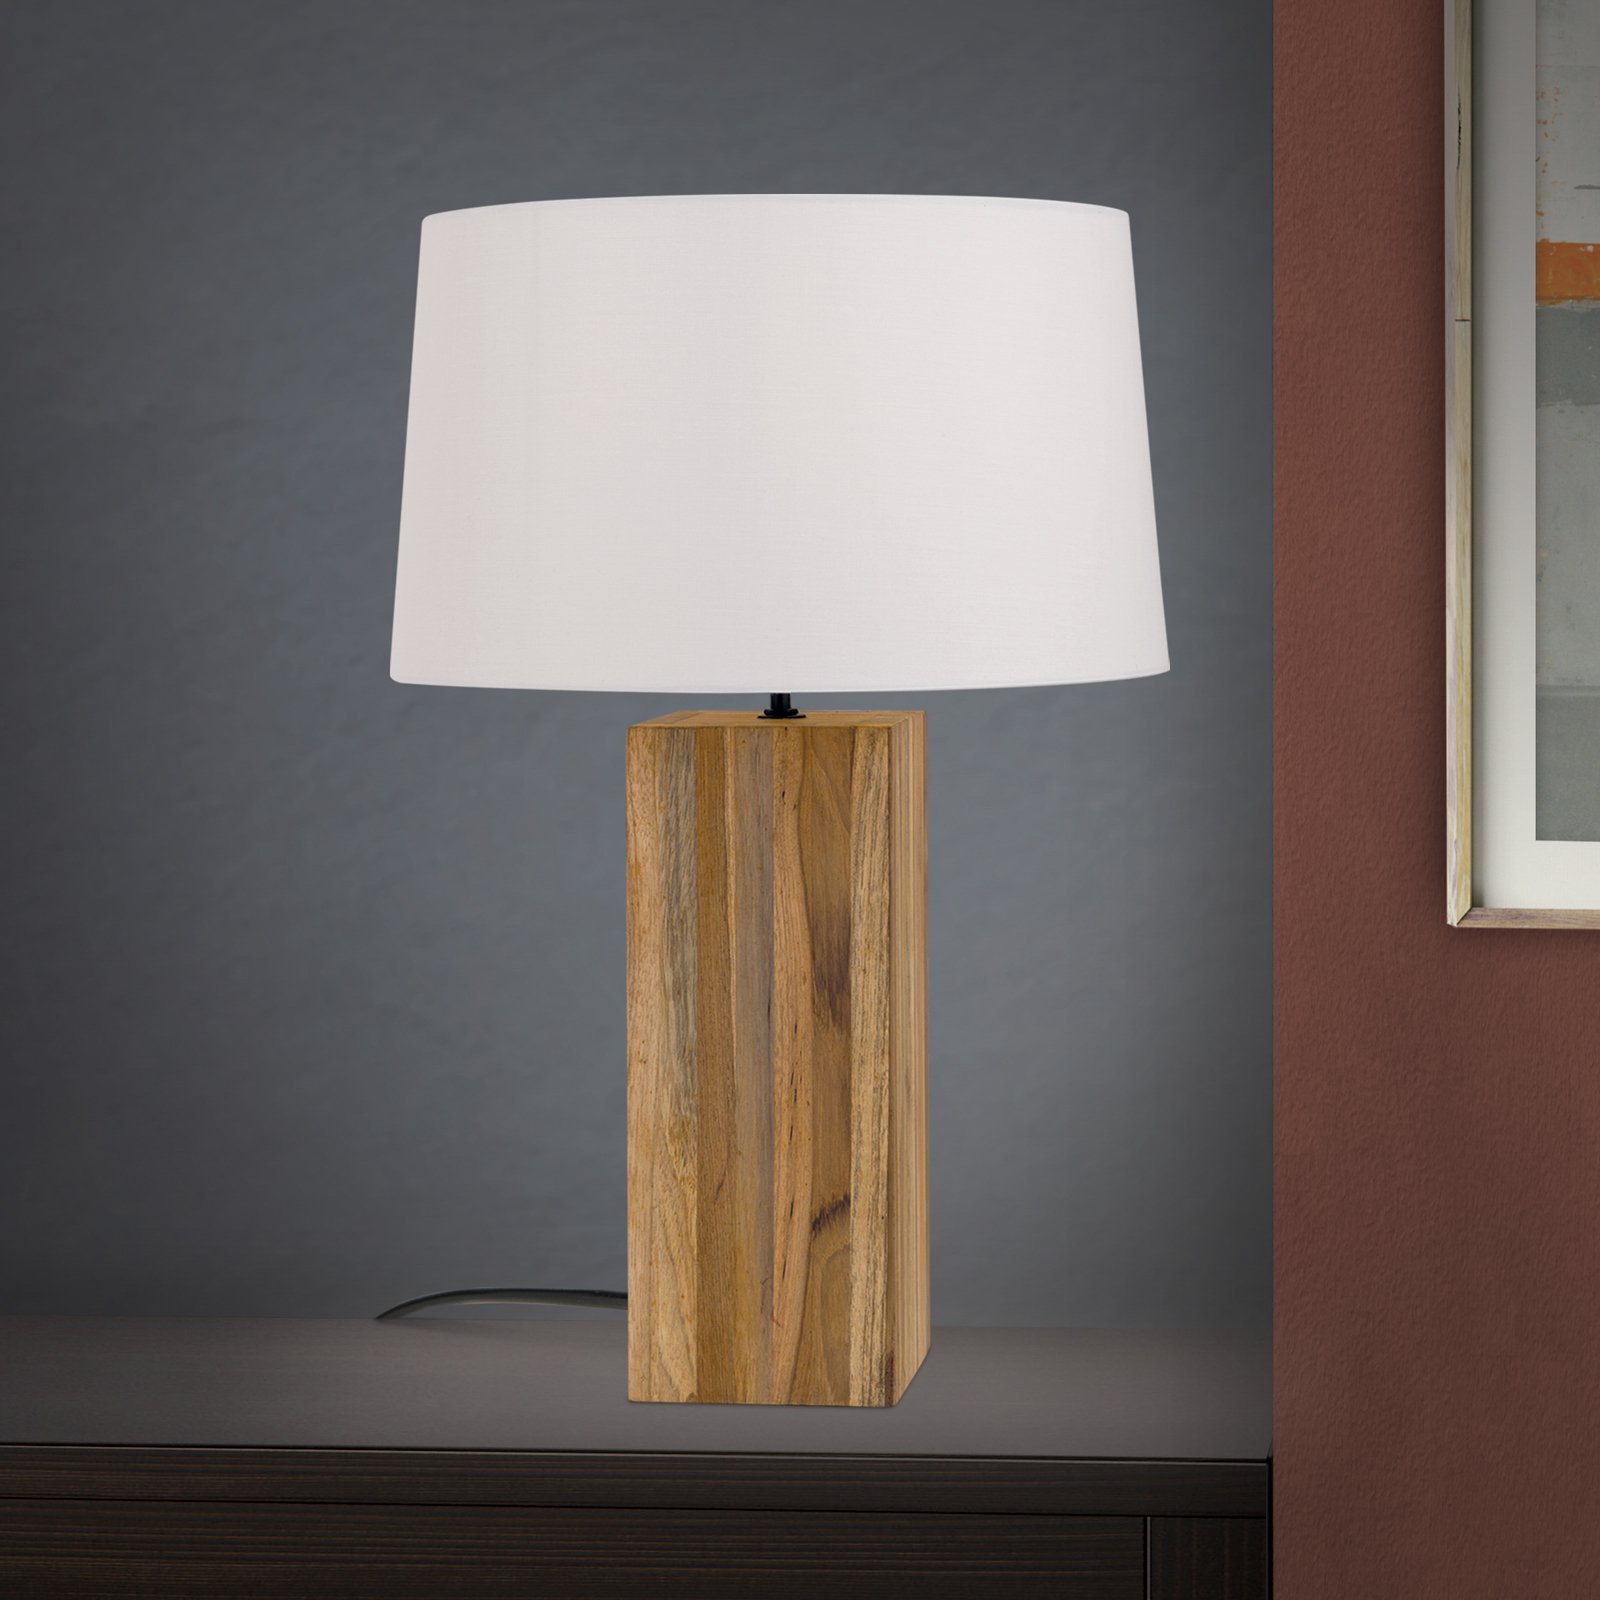 Dallas table lamp, cuboid wooden base